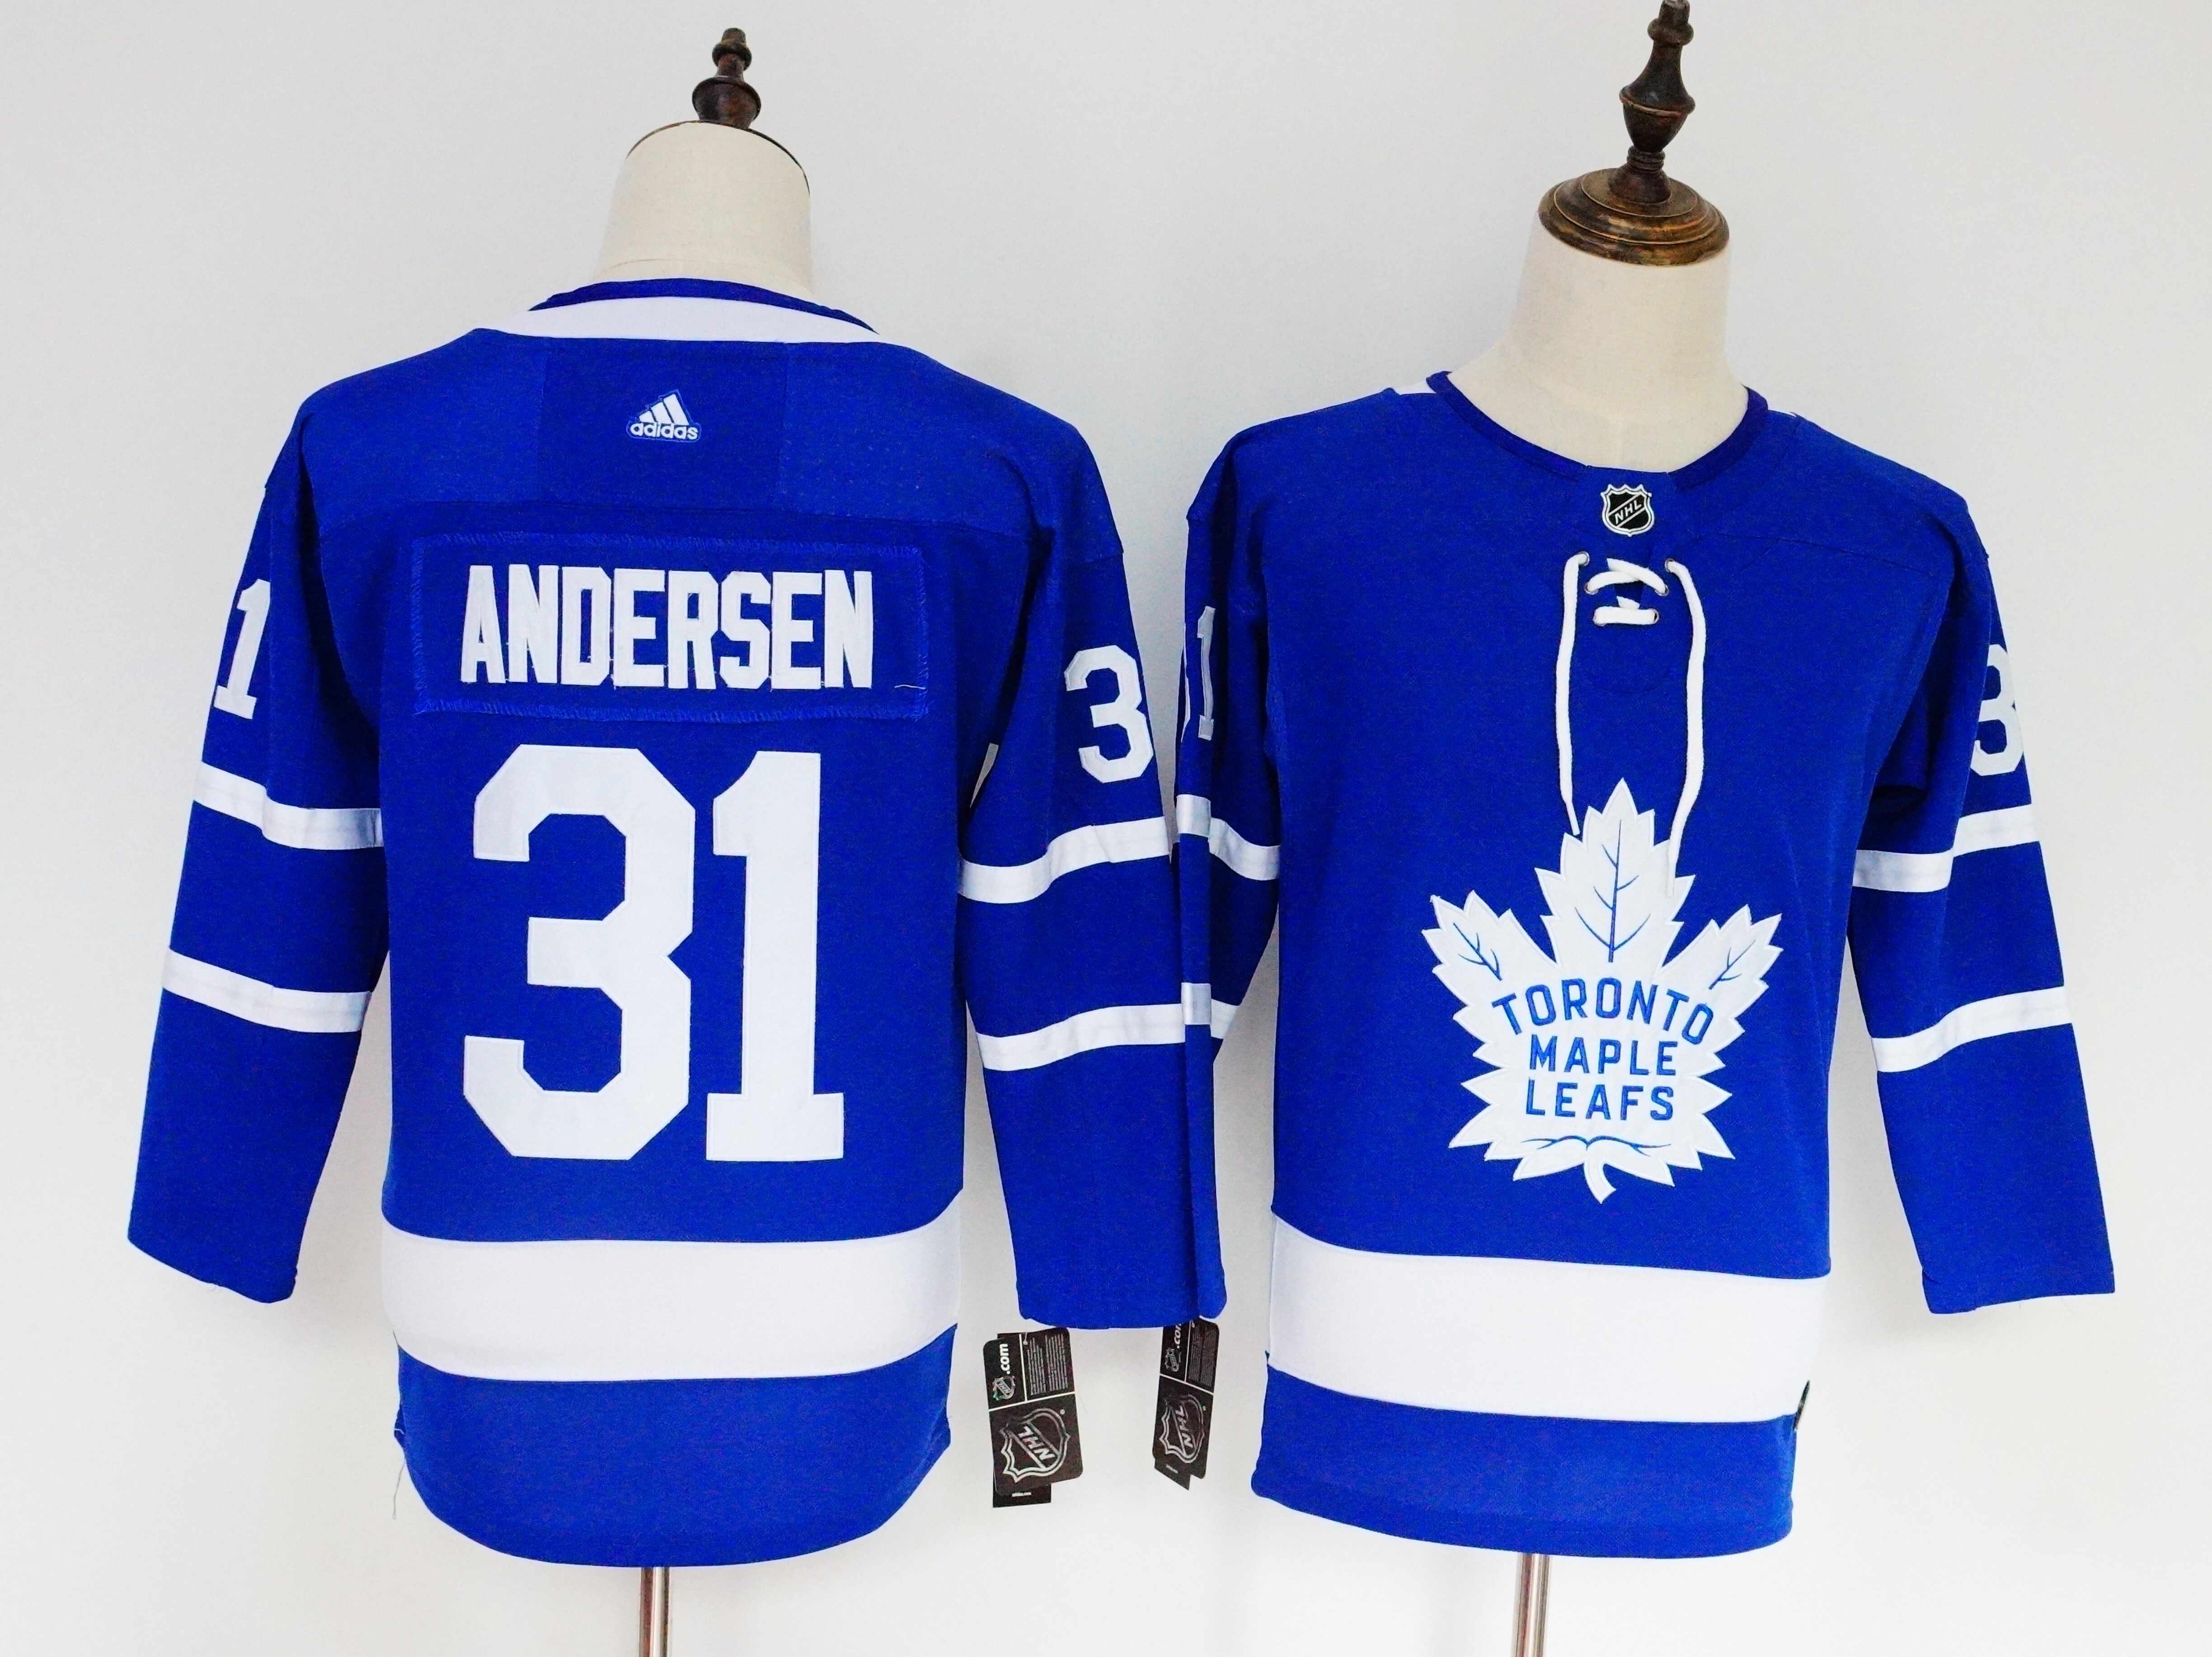 Men's Adidas Toronto Maple Leafs #31 Frederik Andersen Blue Stitched NHL Jersey